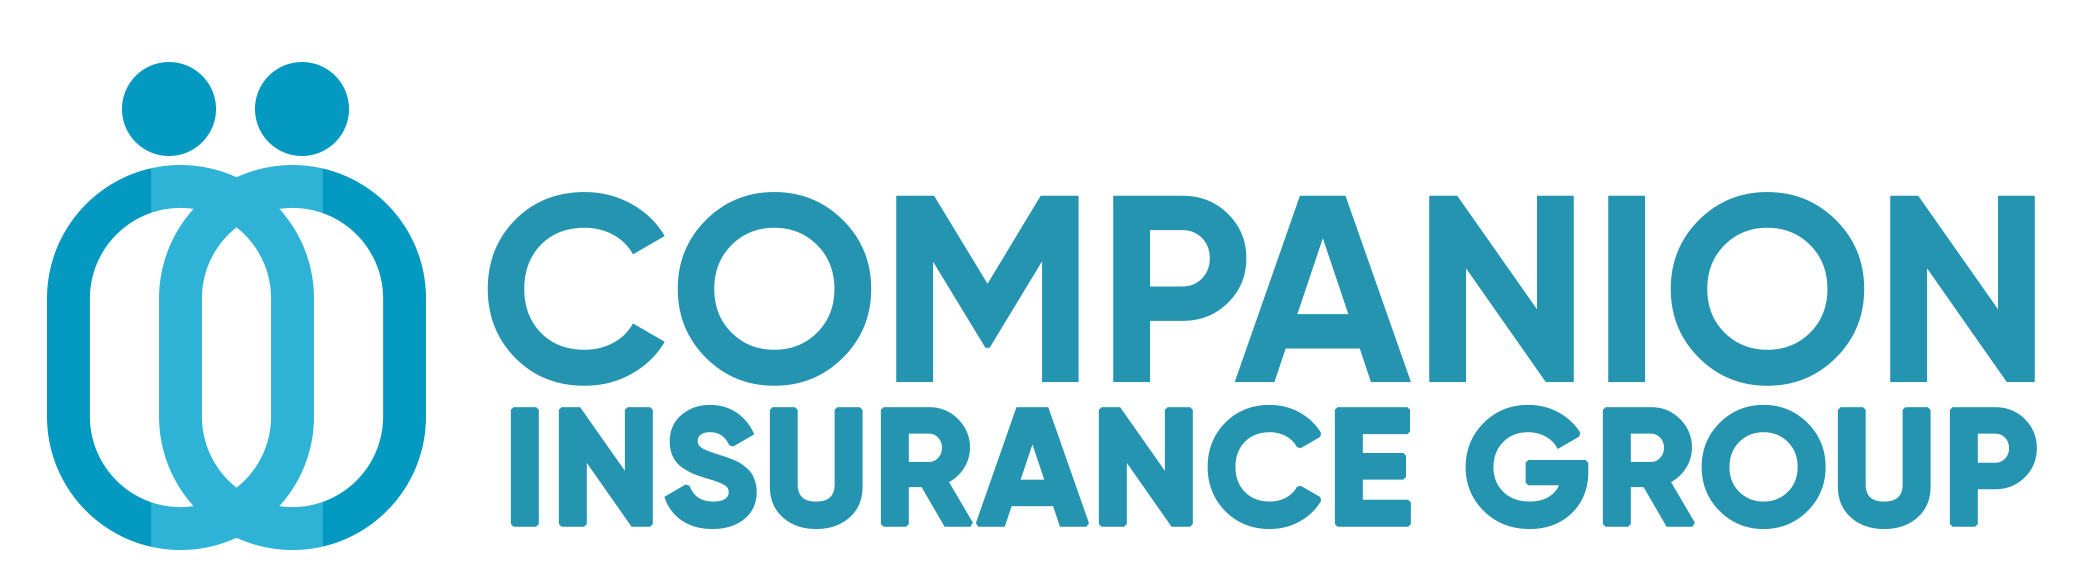 companion Insurance Group LTD